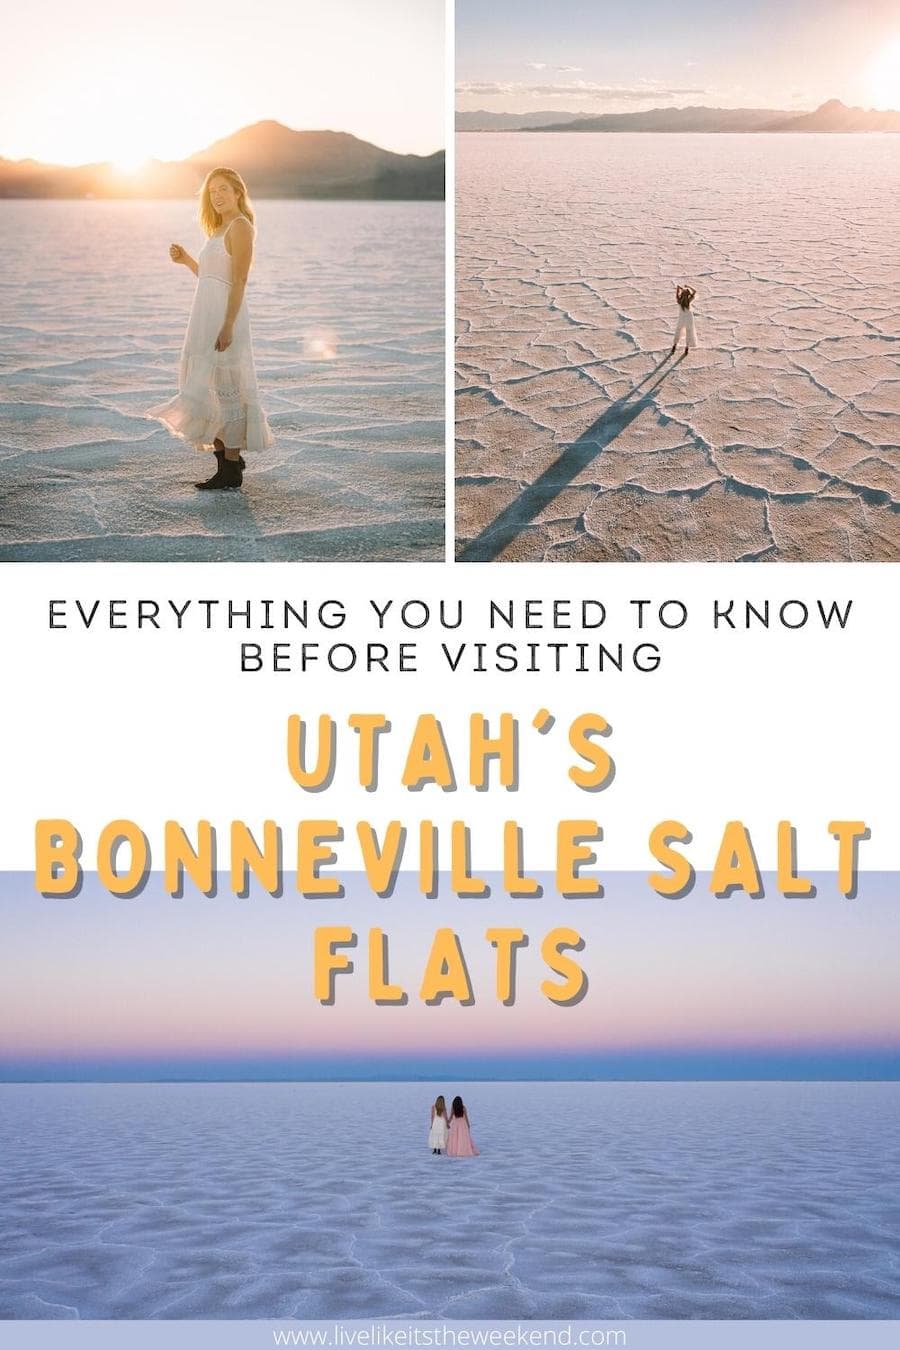 Bonneville Salt Flats guide pin cover